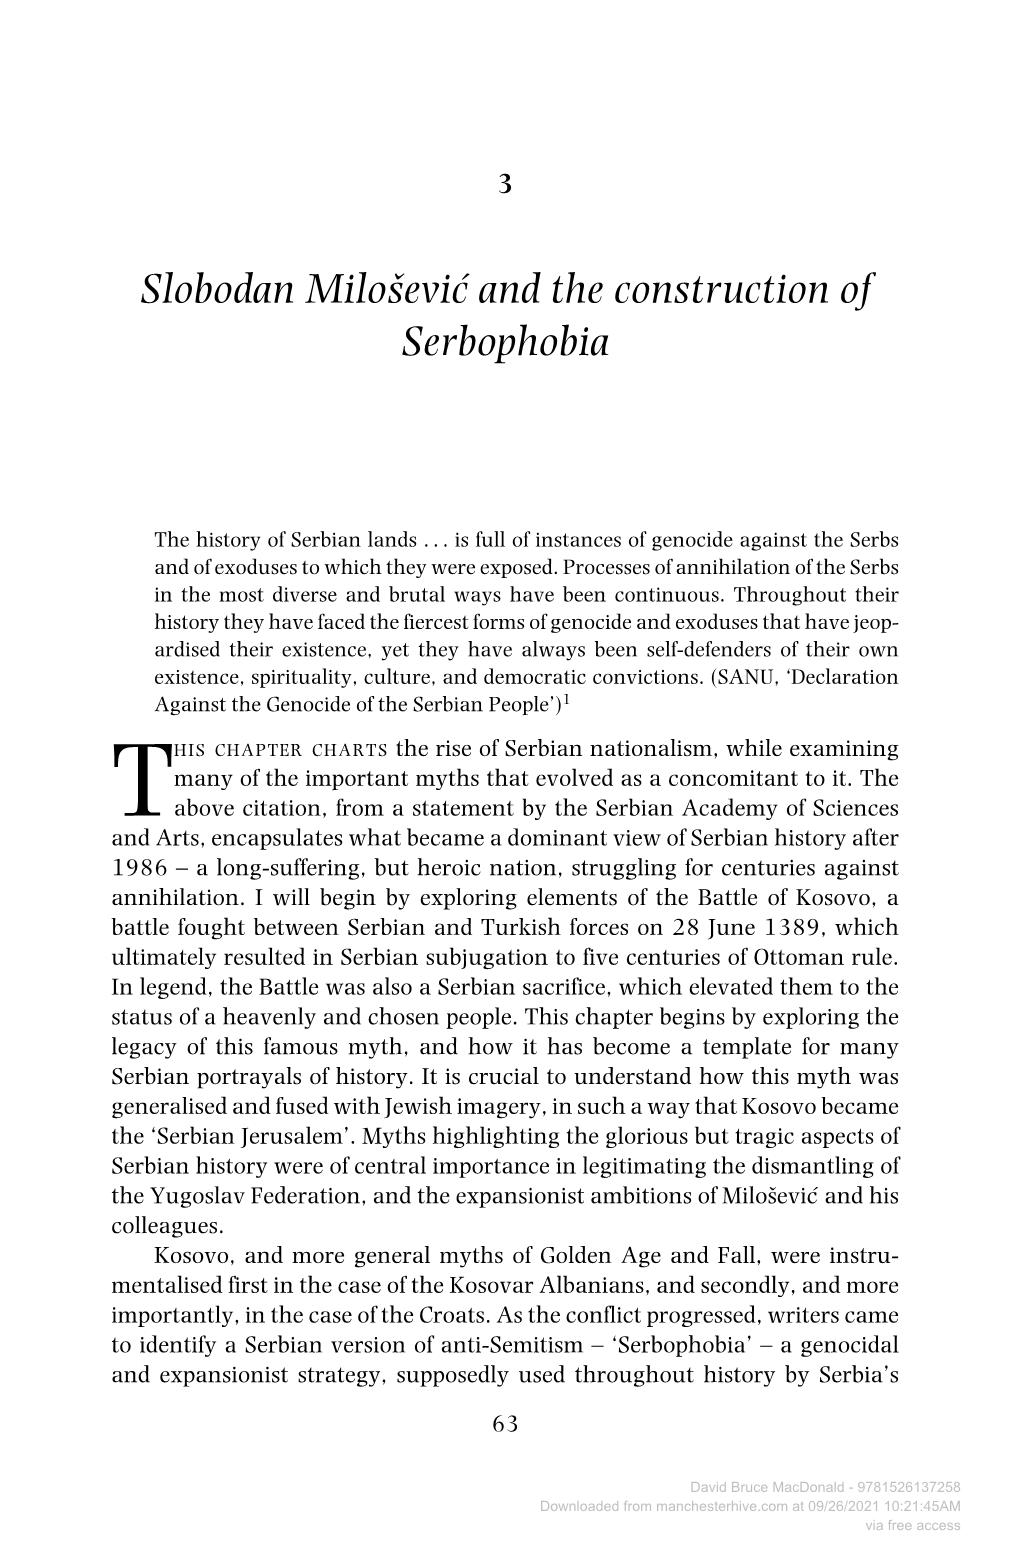 Slobodan Miloševic and the Construction of Serbophobia